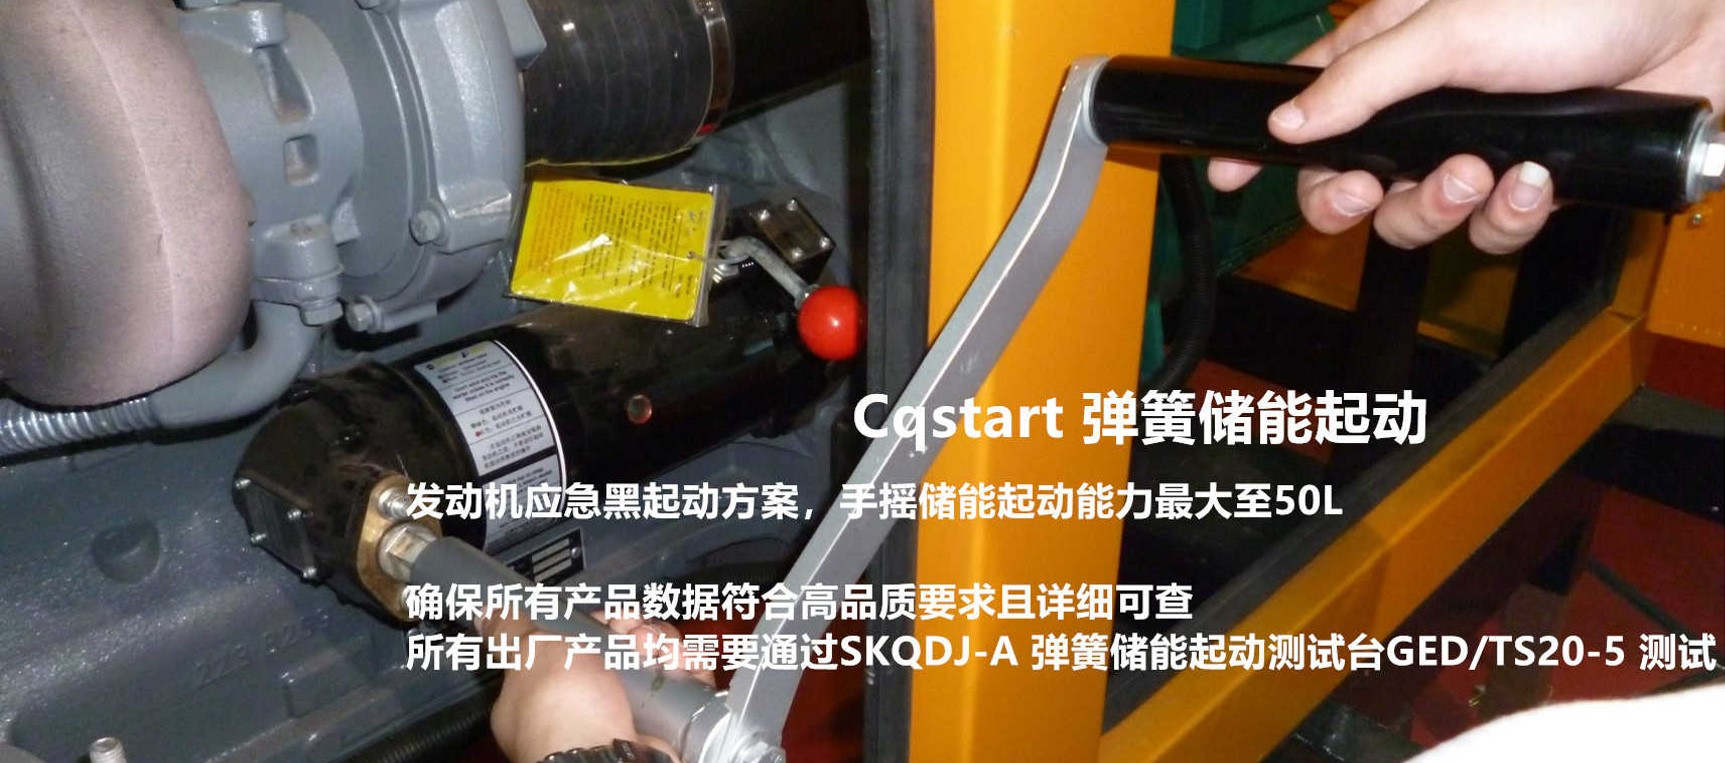 cqstart弹簧起动器